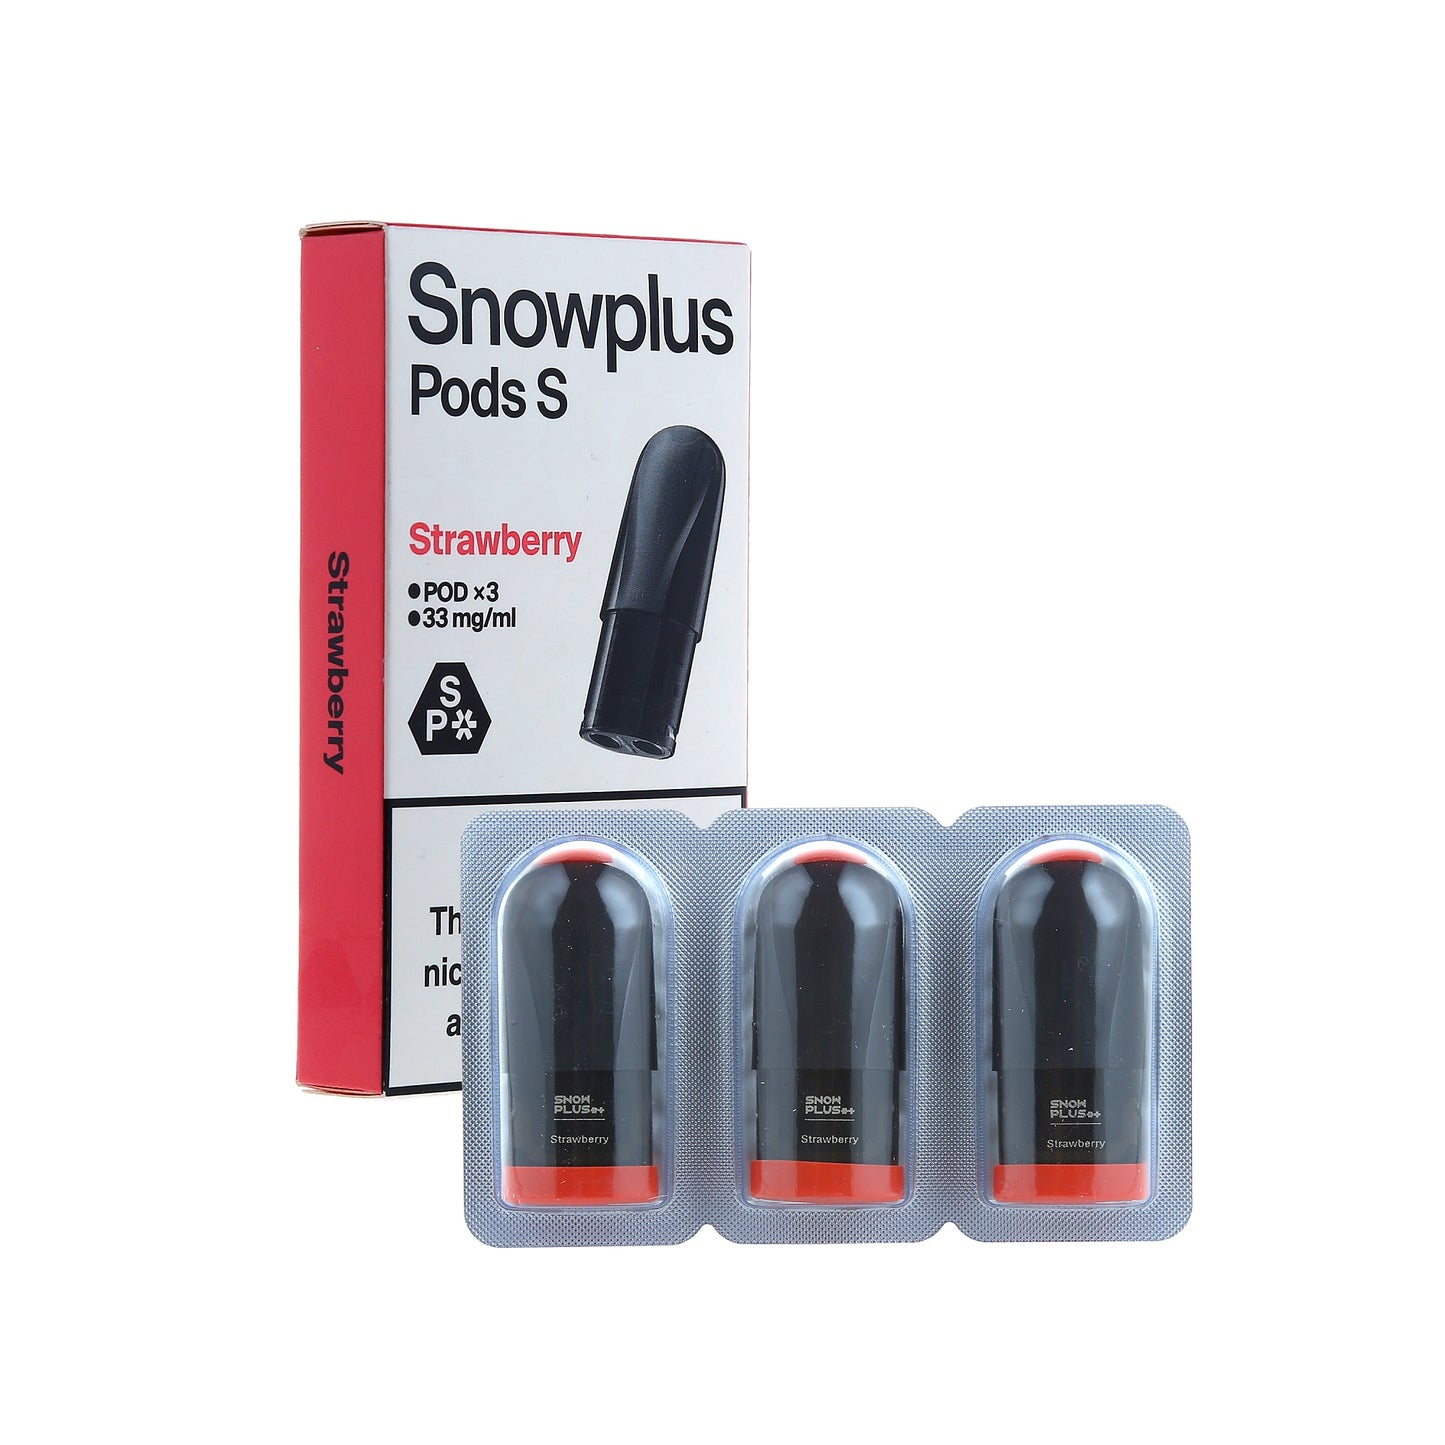 Snowplus Pods 3.0 S Pack of 3 - Multiple Flavors